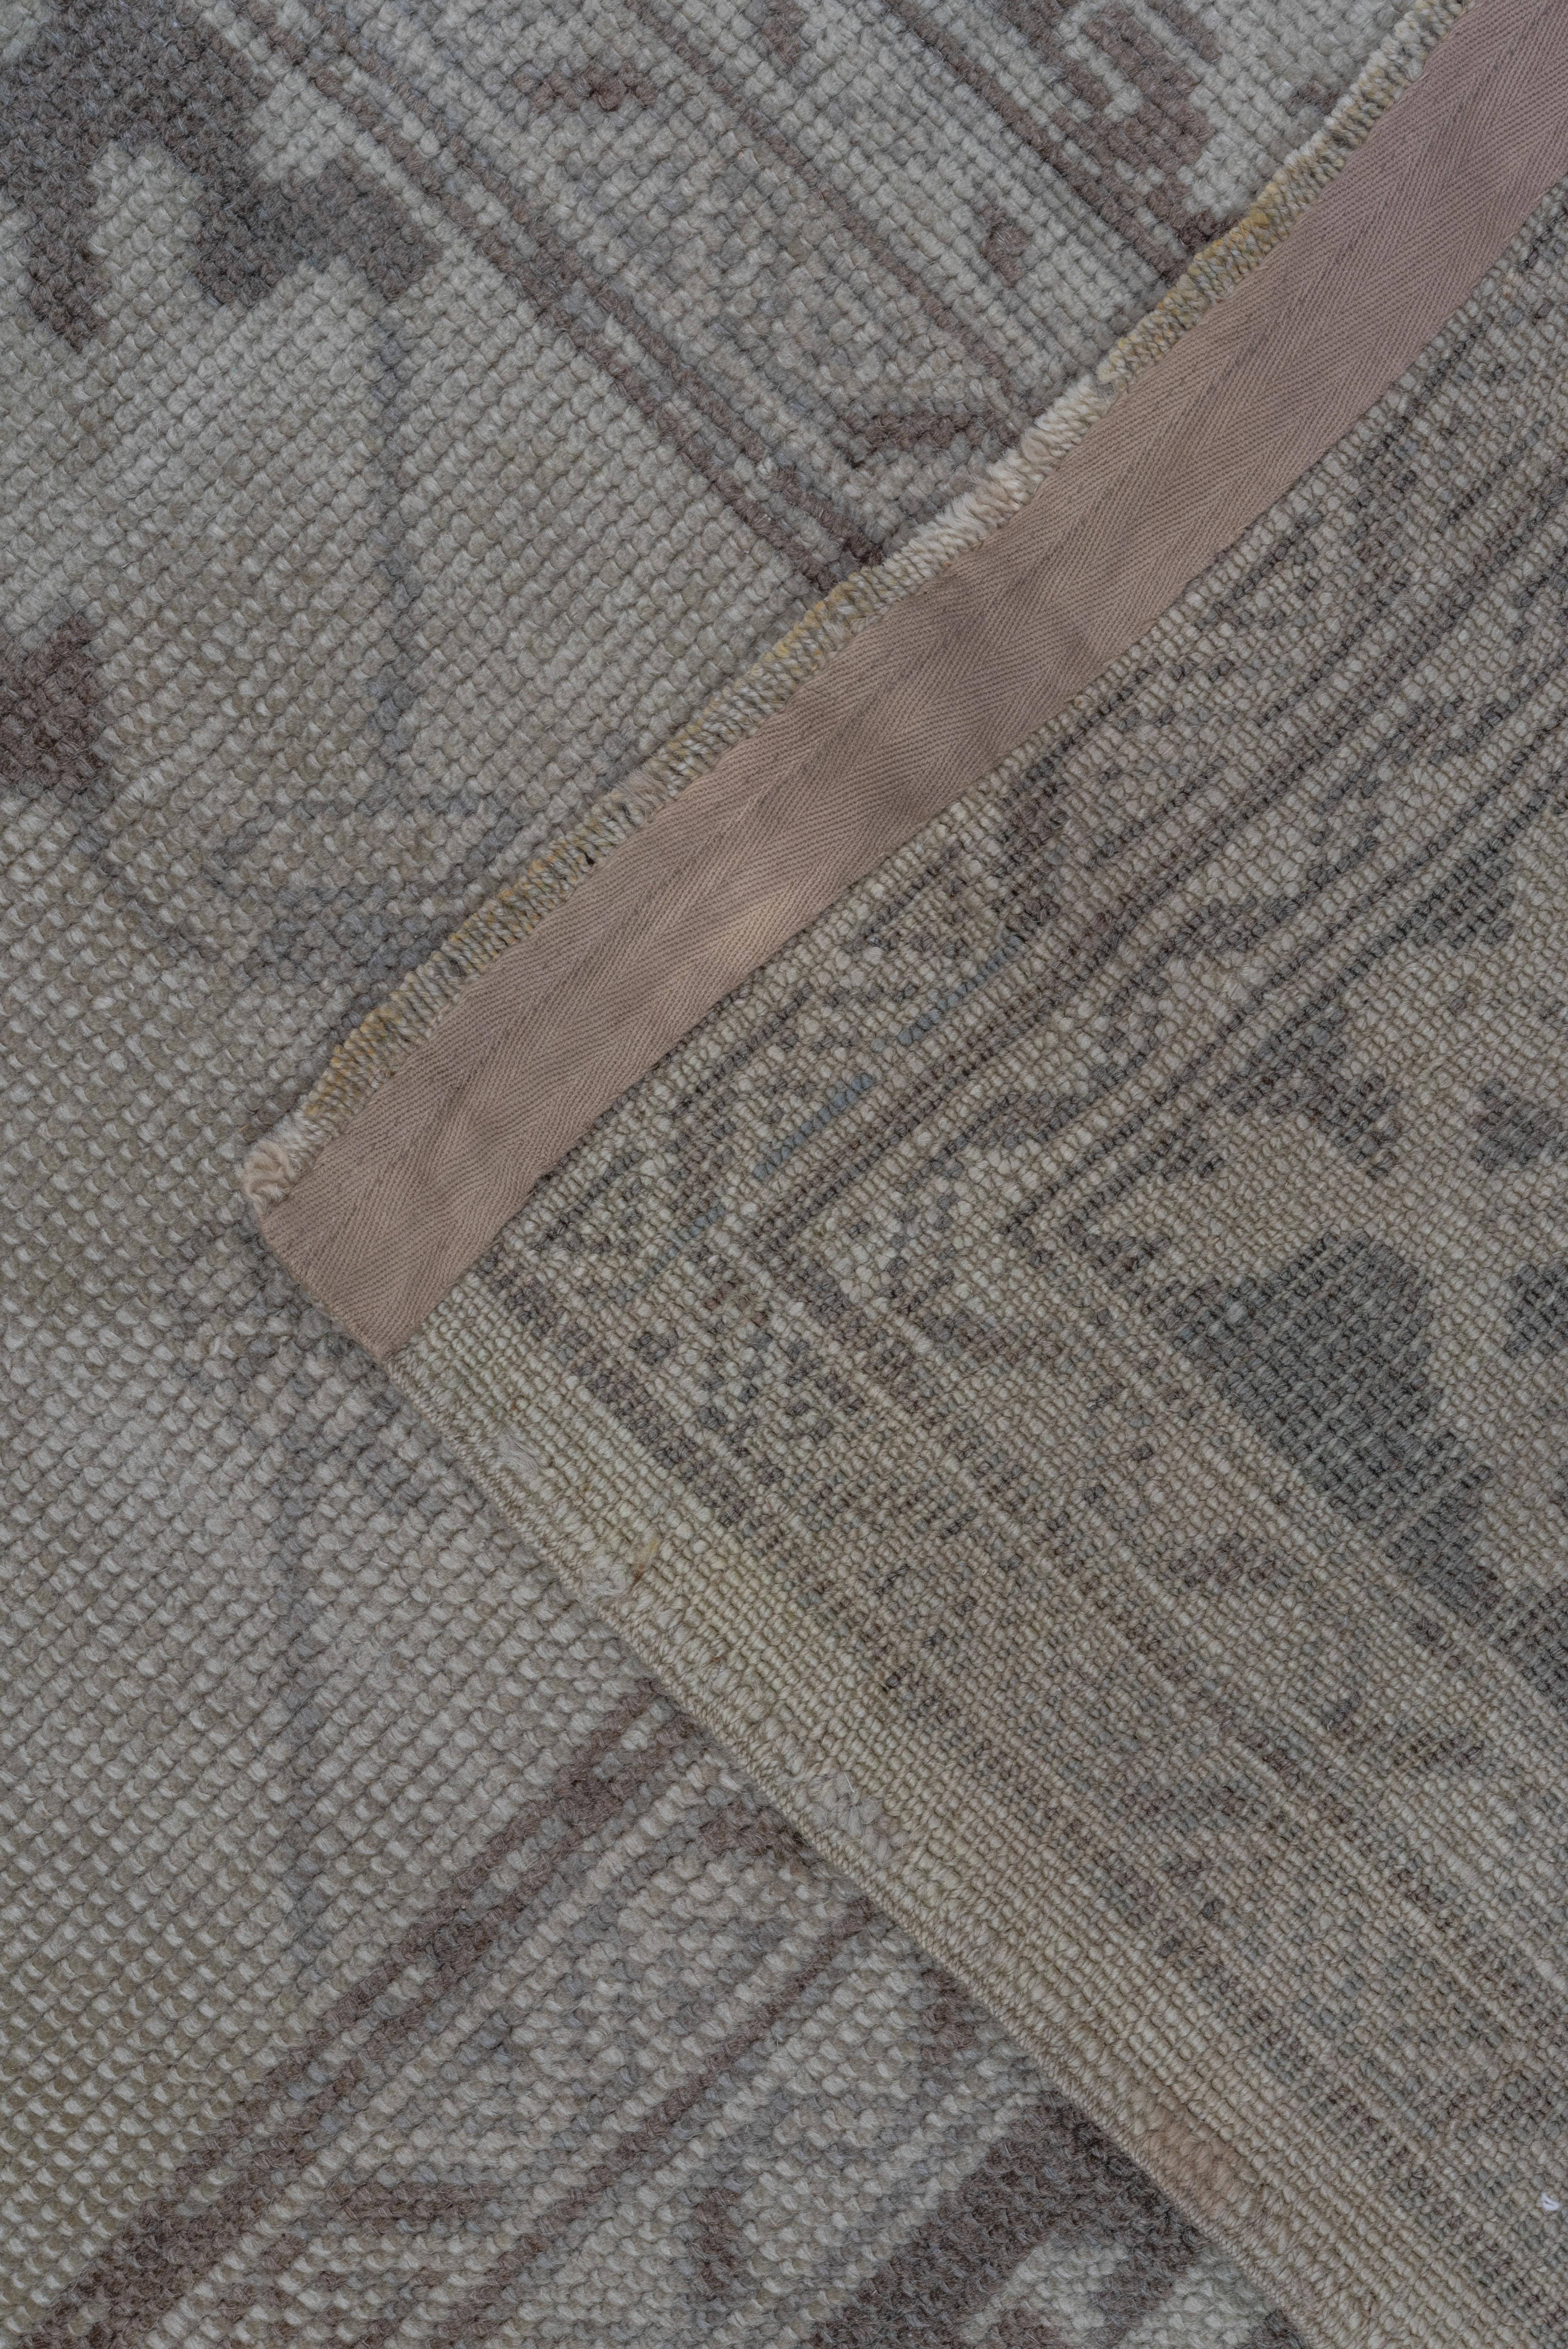 Wool Antique Neutral Oushak Square Rug, circa 1920s, Neutral Palette